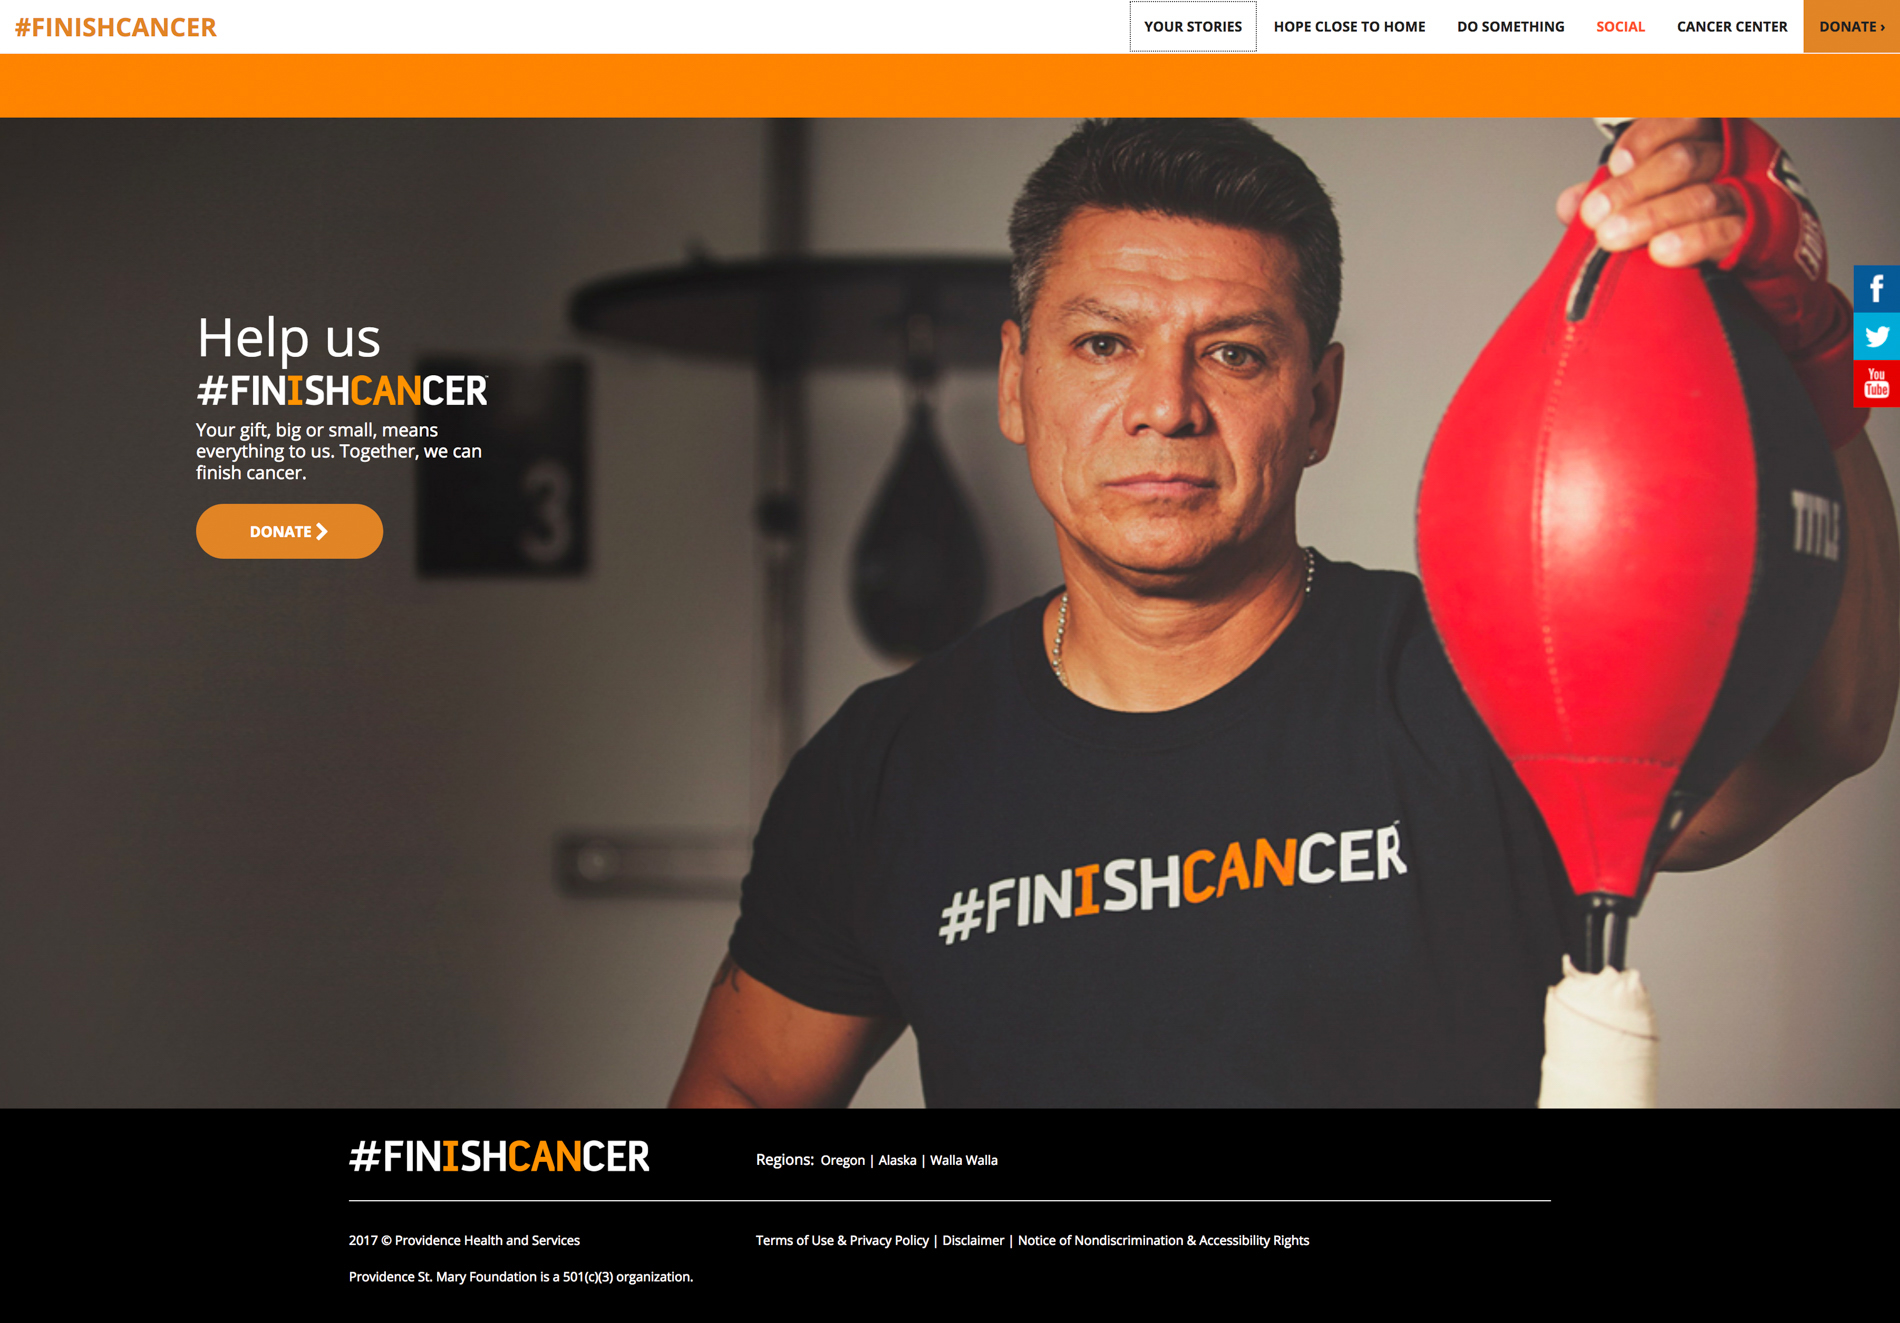 #finishcancer campaign